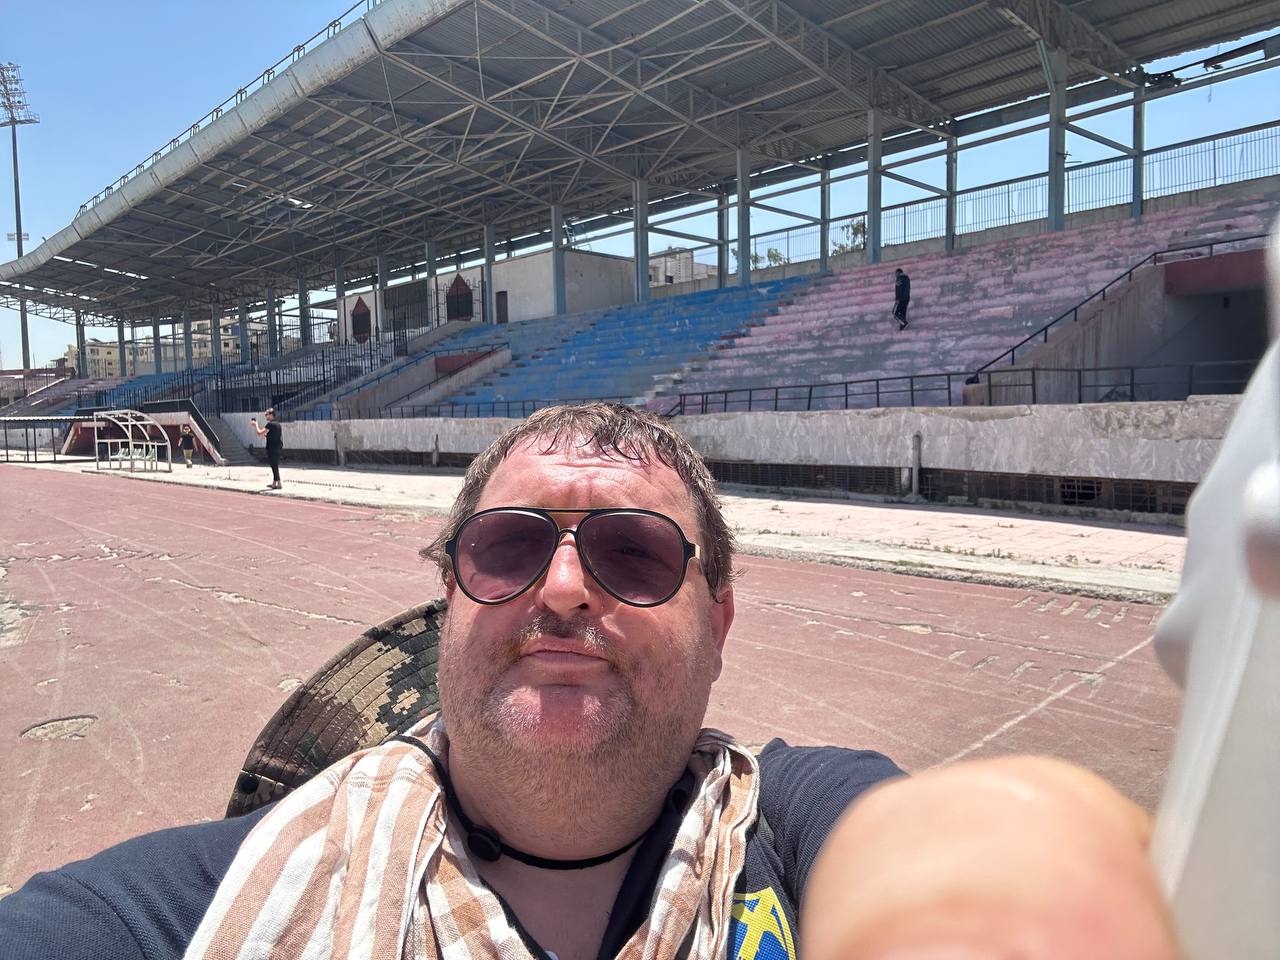 Raqqa Football Stadium